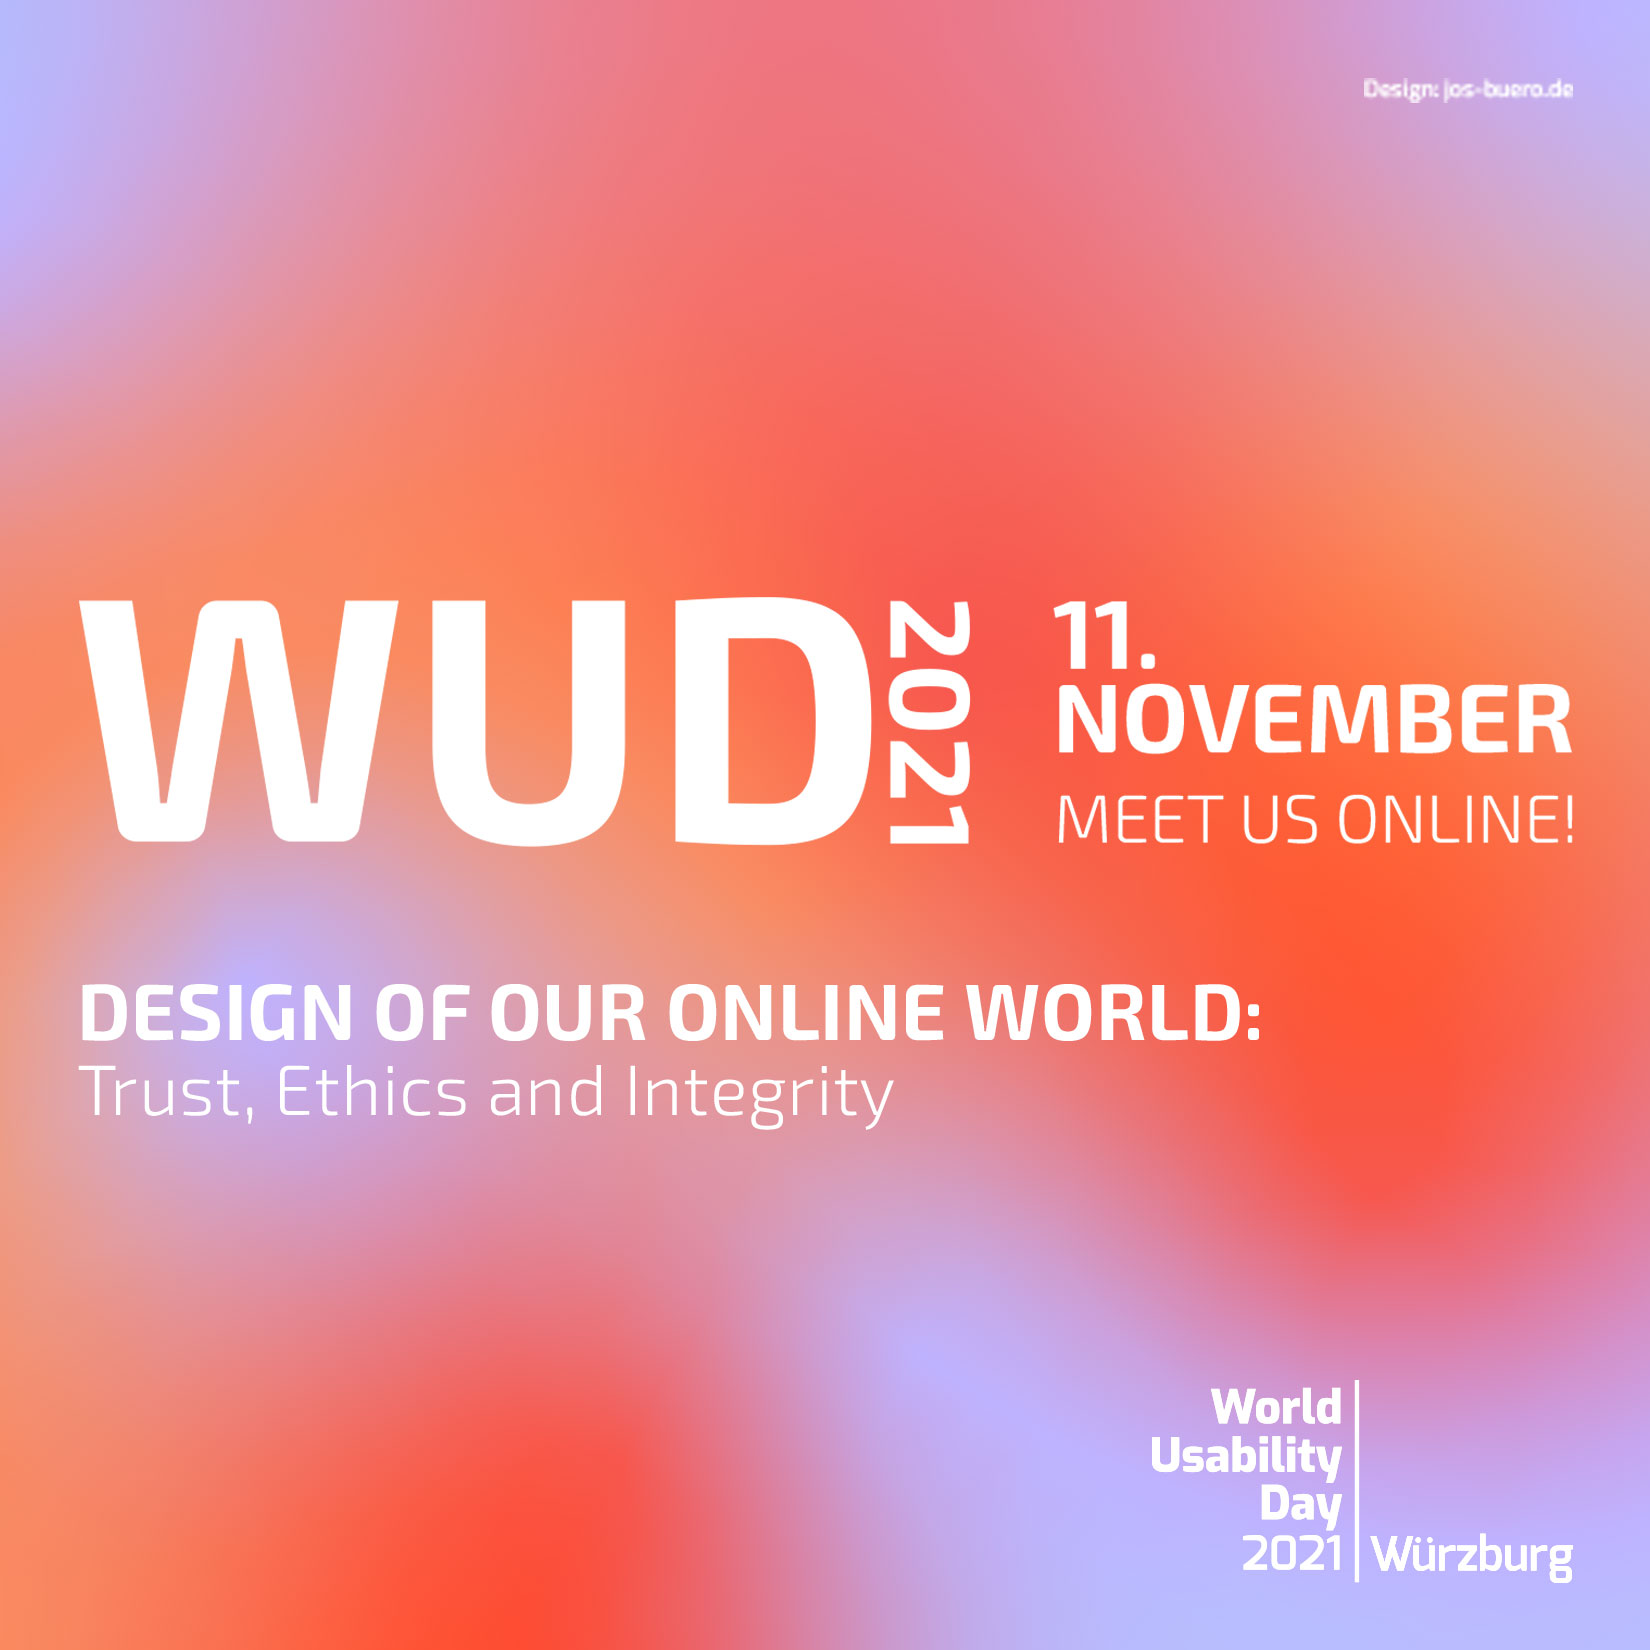 World Usability Day 2021 Verlauf Design